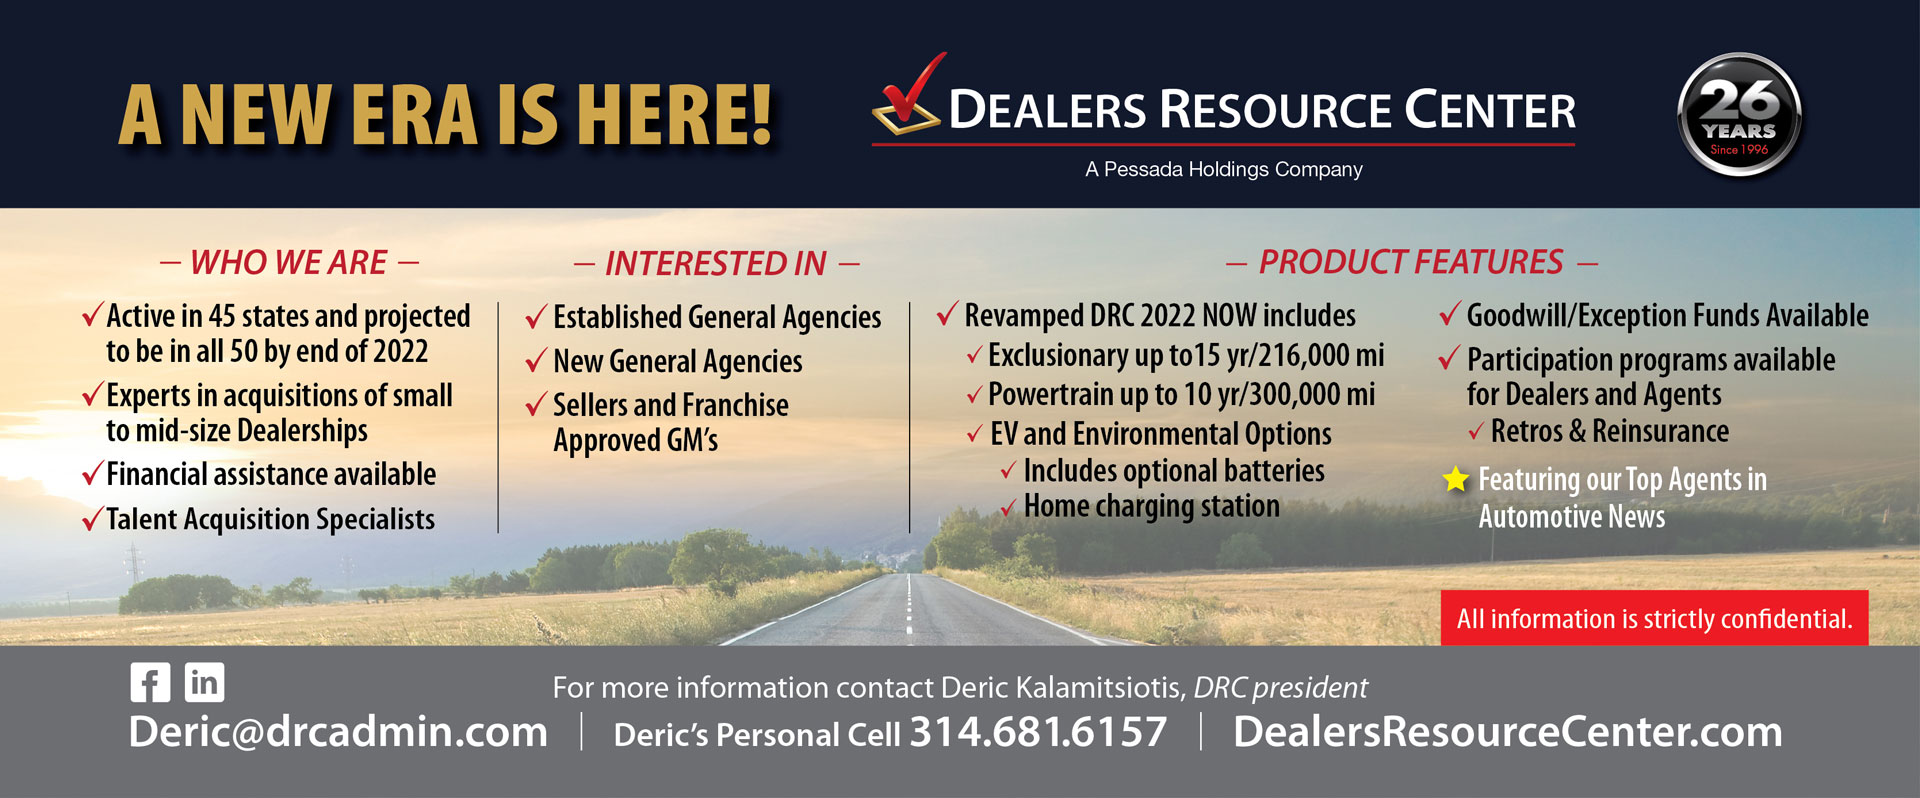 Dealers Resource Center New Era